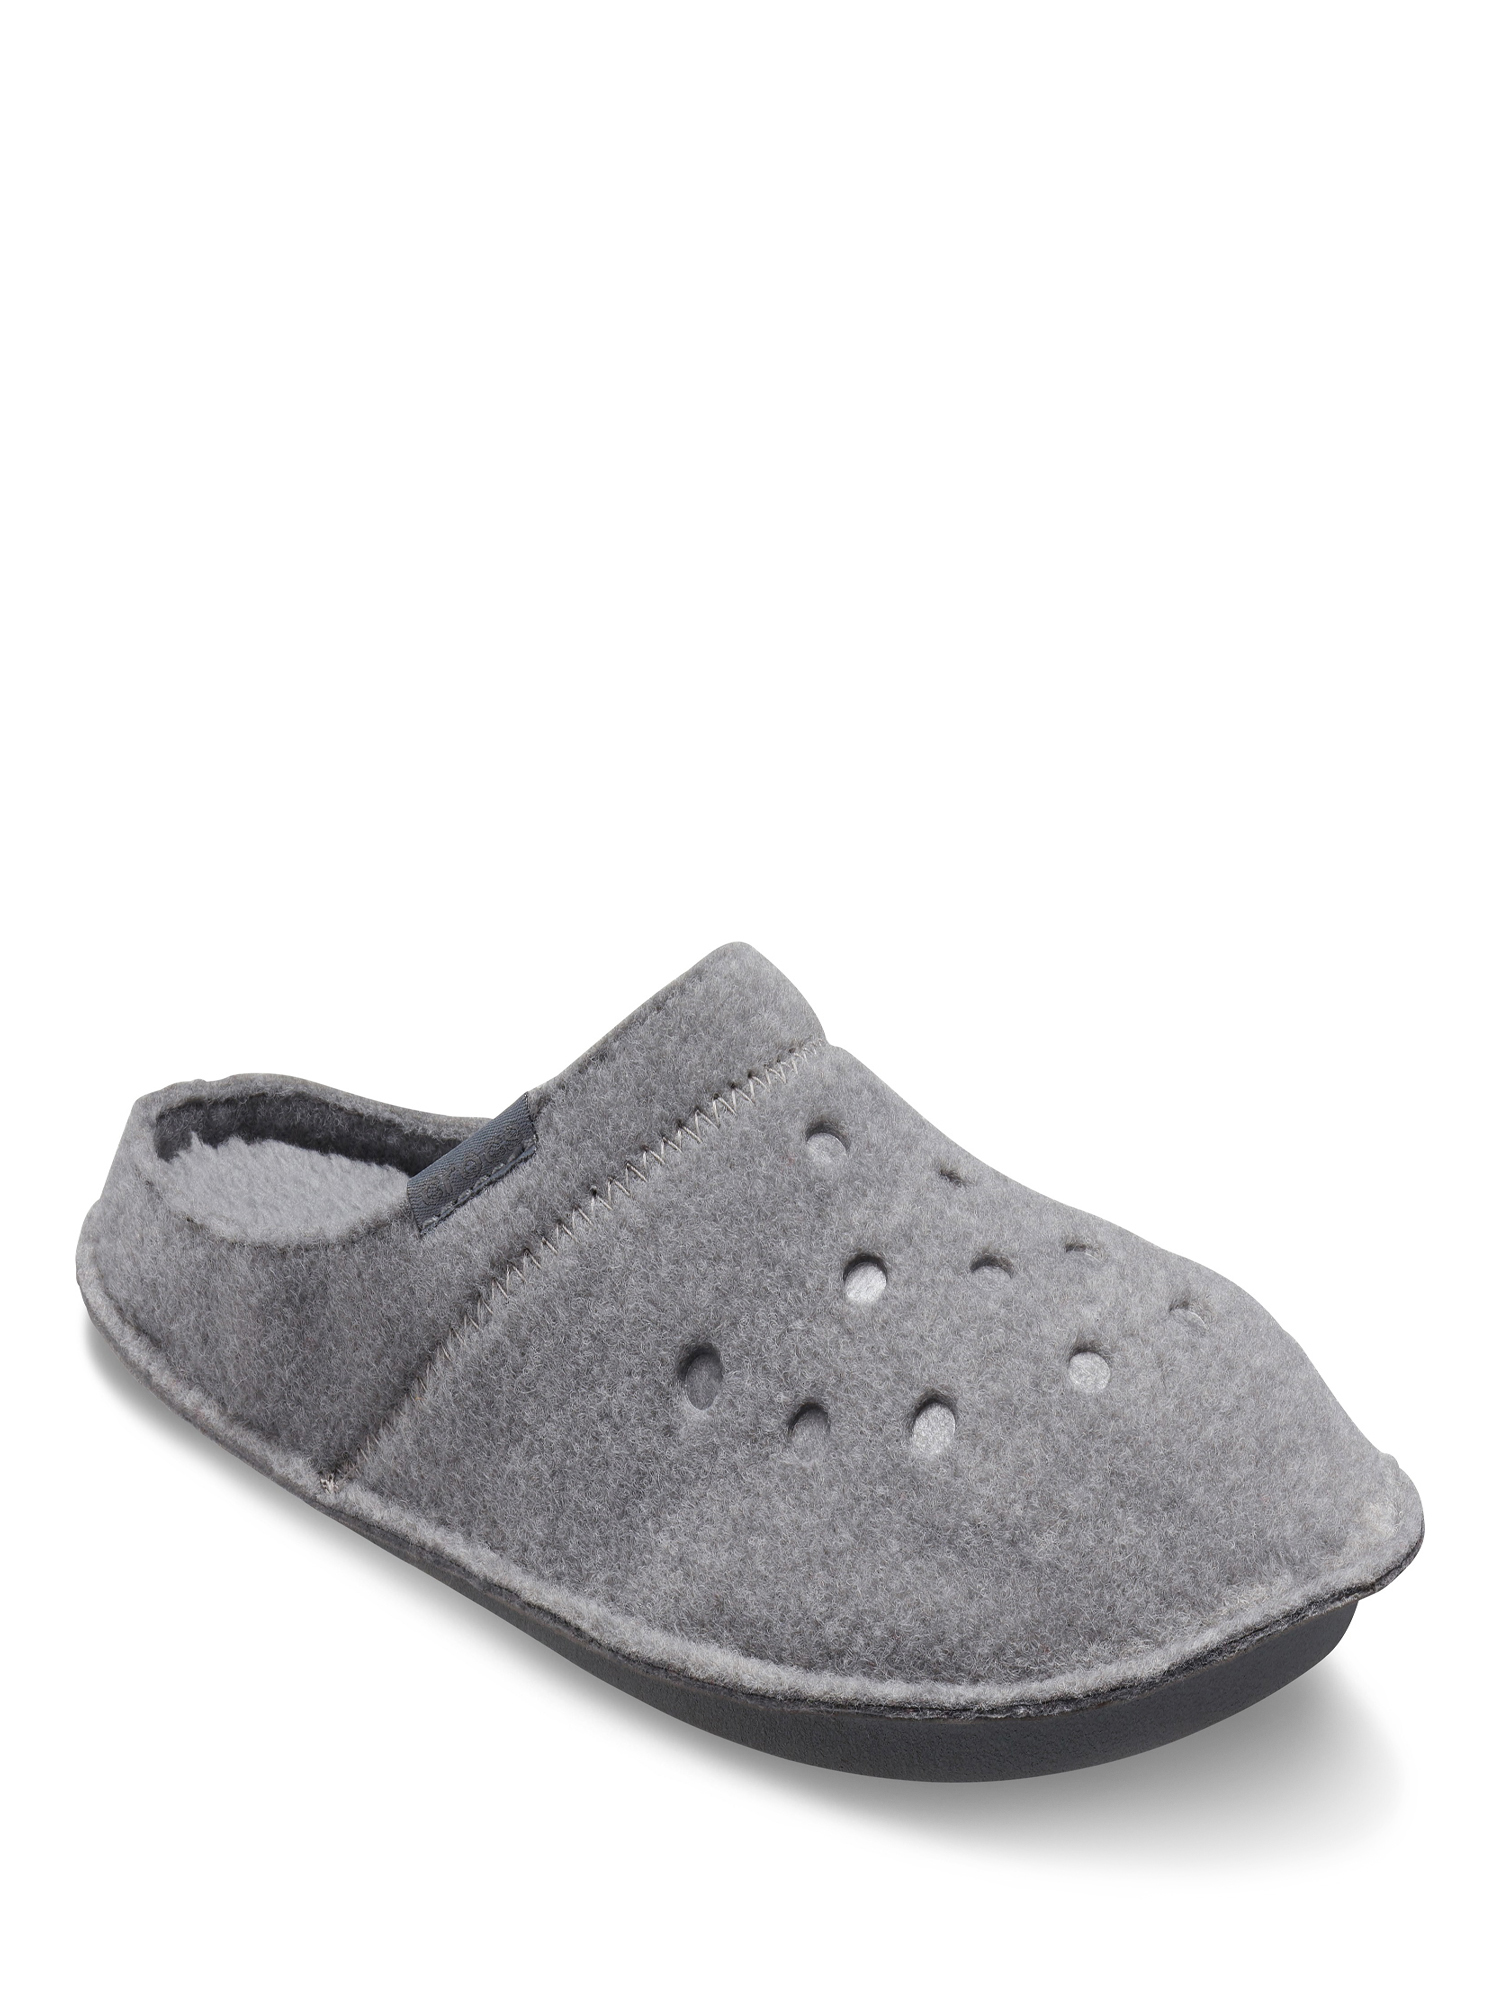 Crocs Unisex Classic Comfort Slippers - image 1 of 9